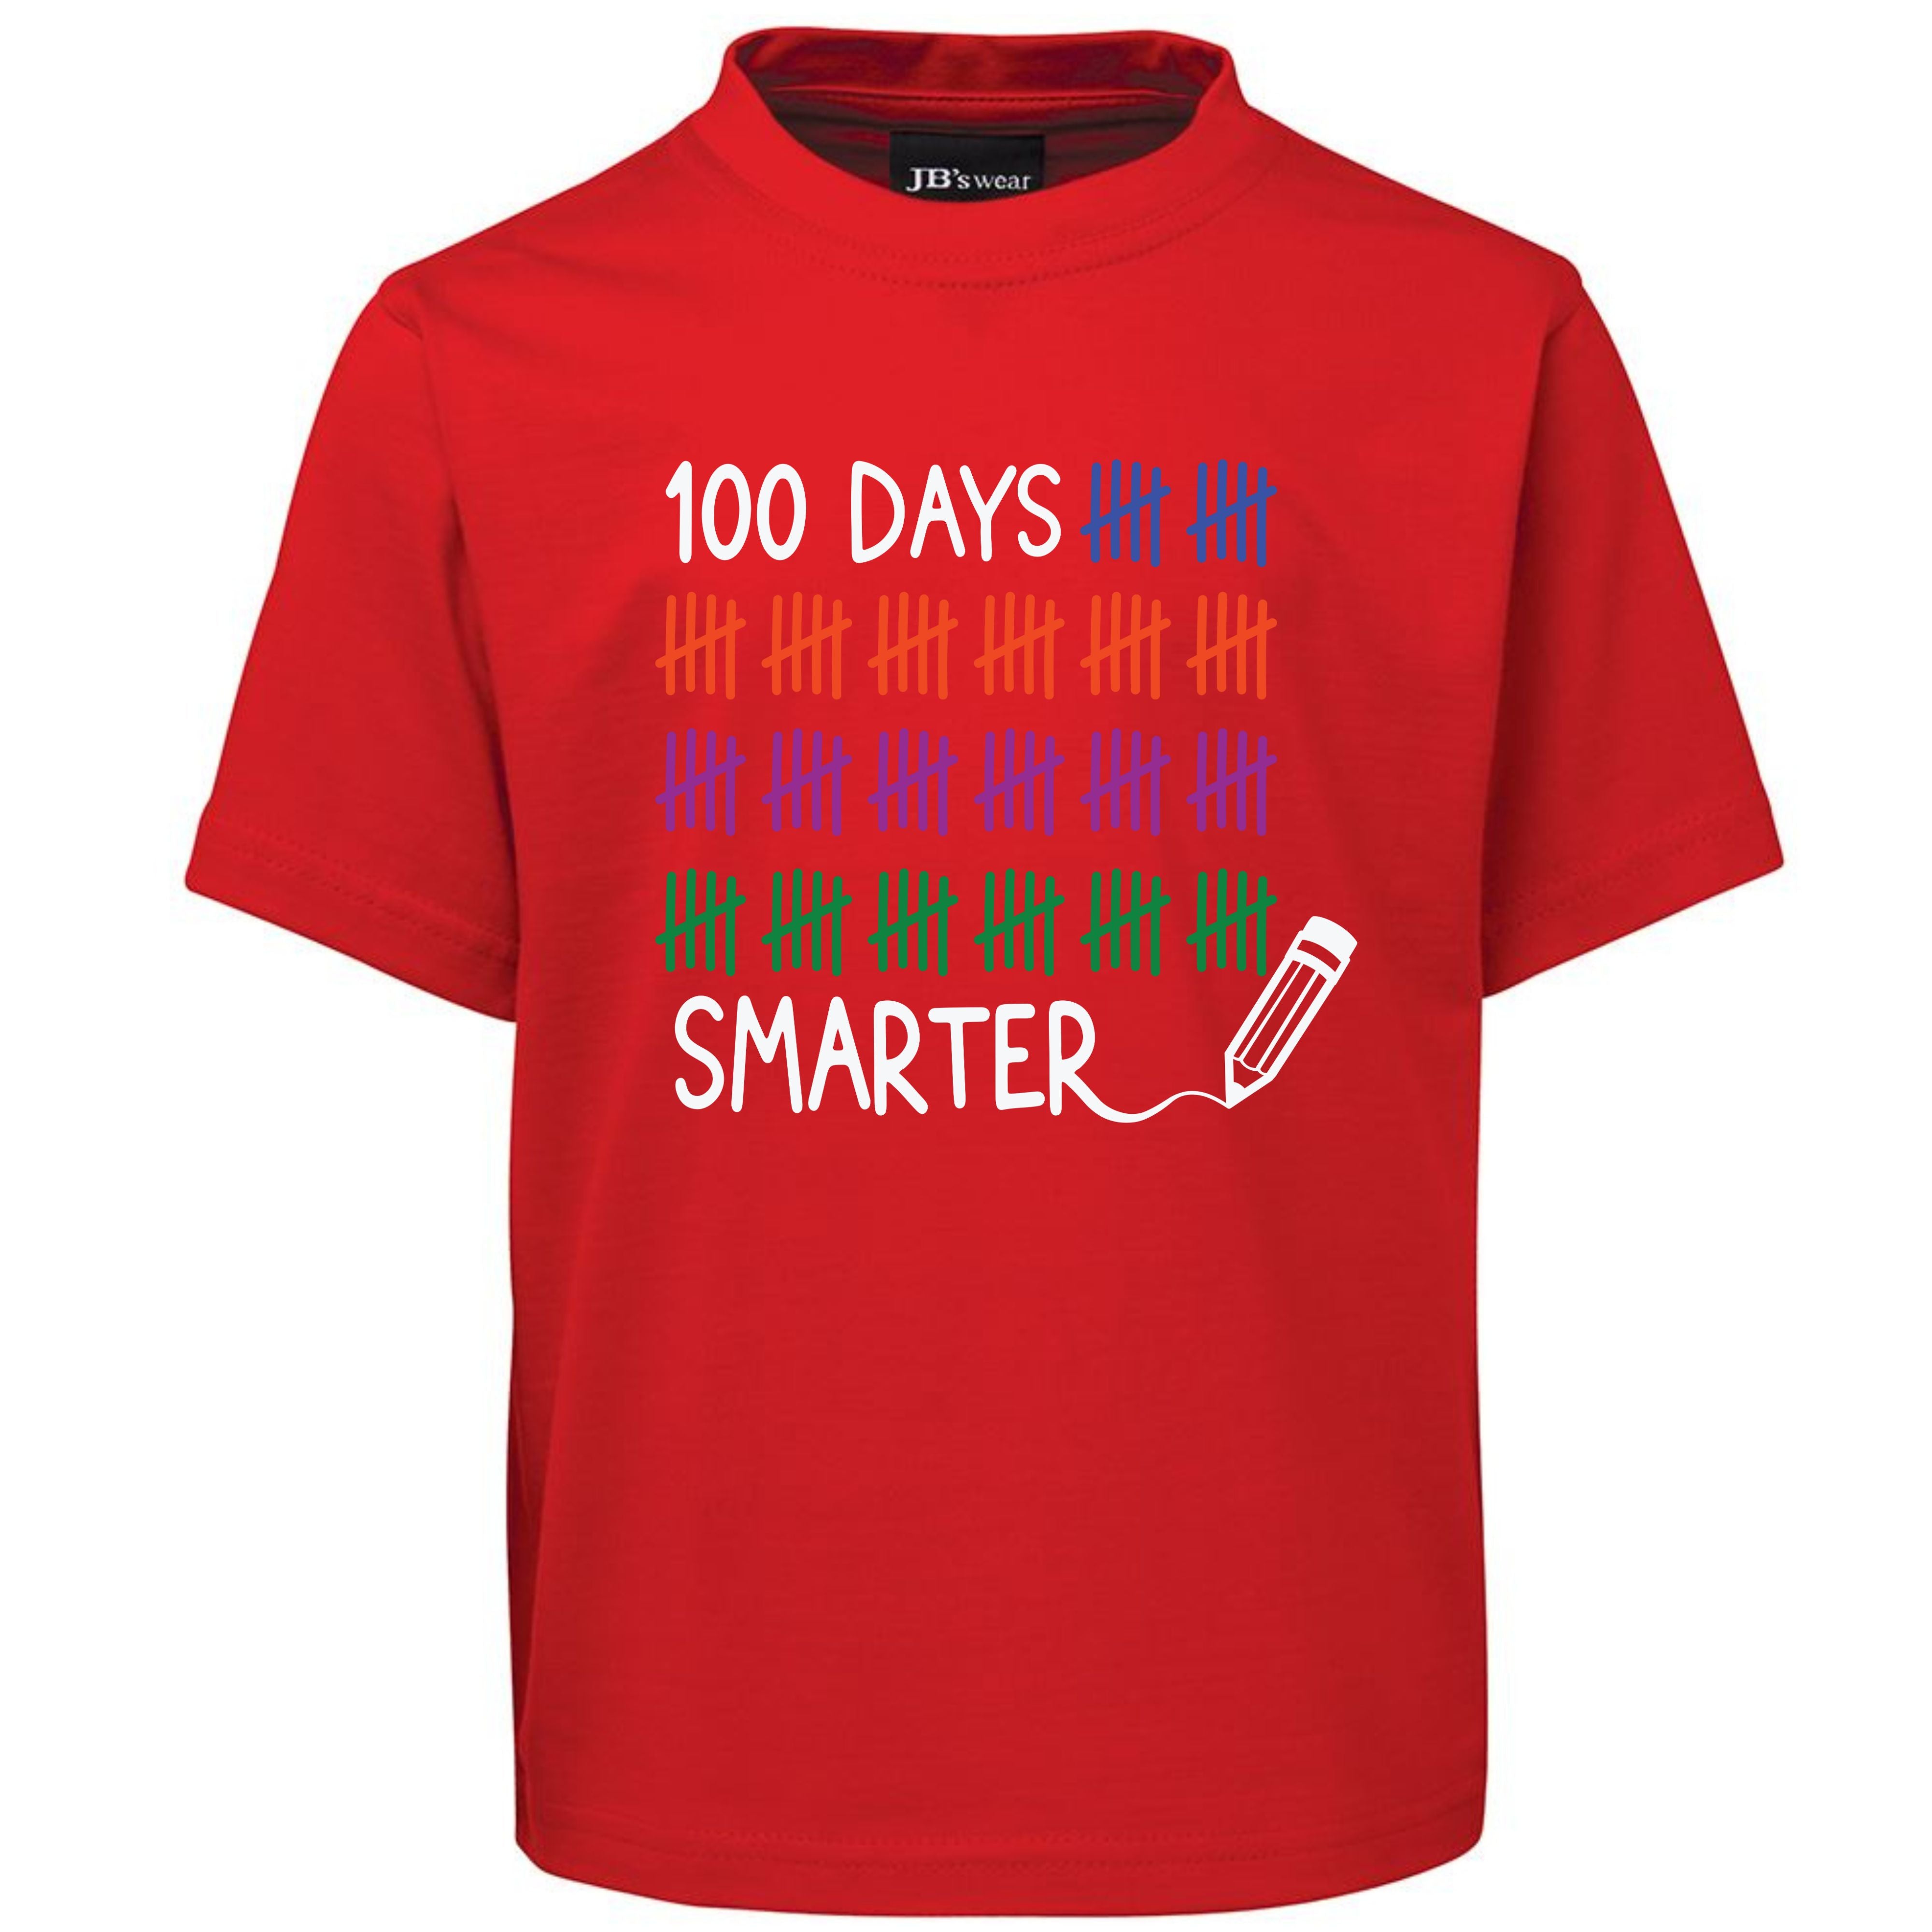 100 DAYS SMARTER TALLY TSHIRT